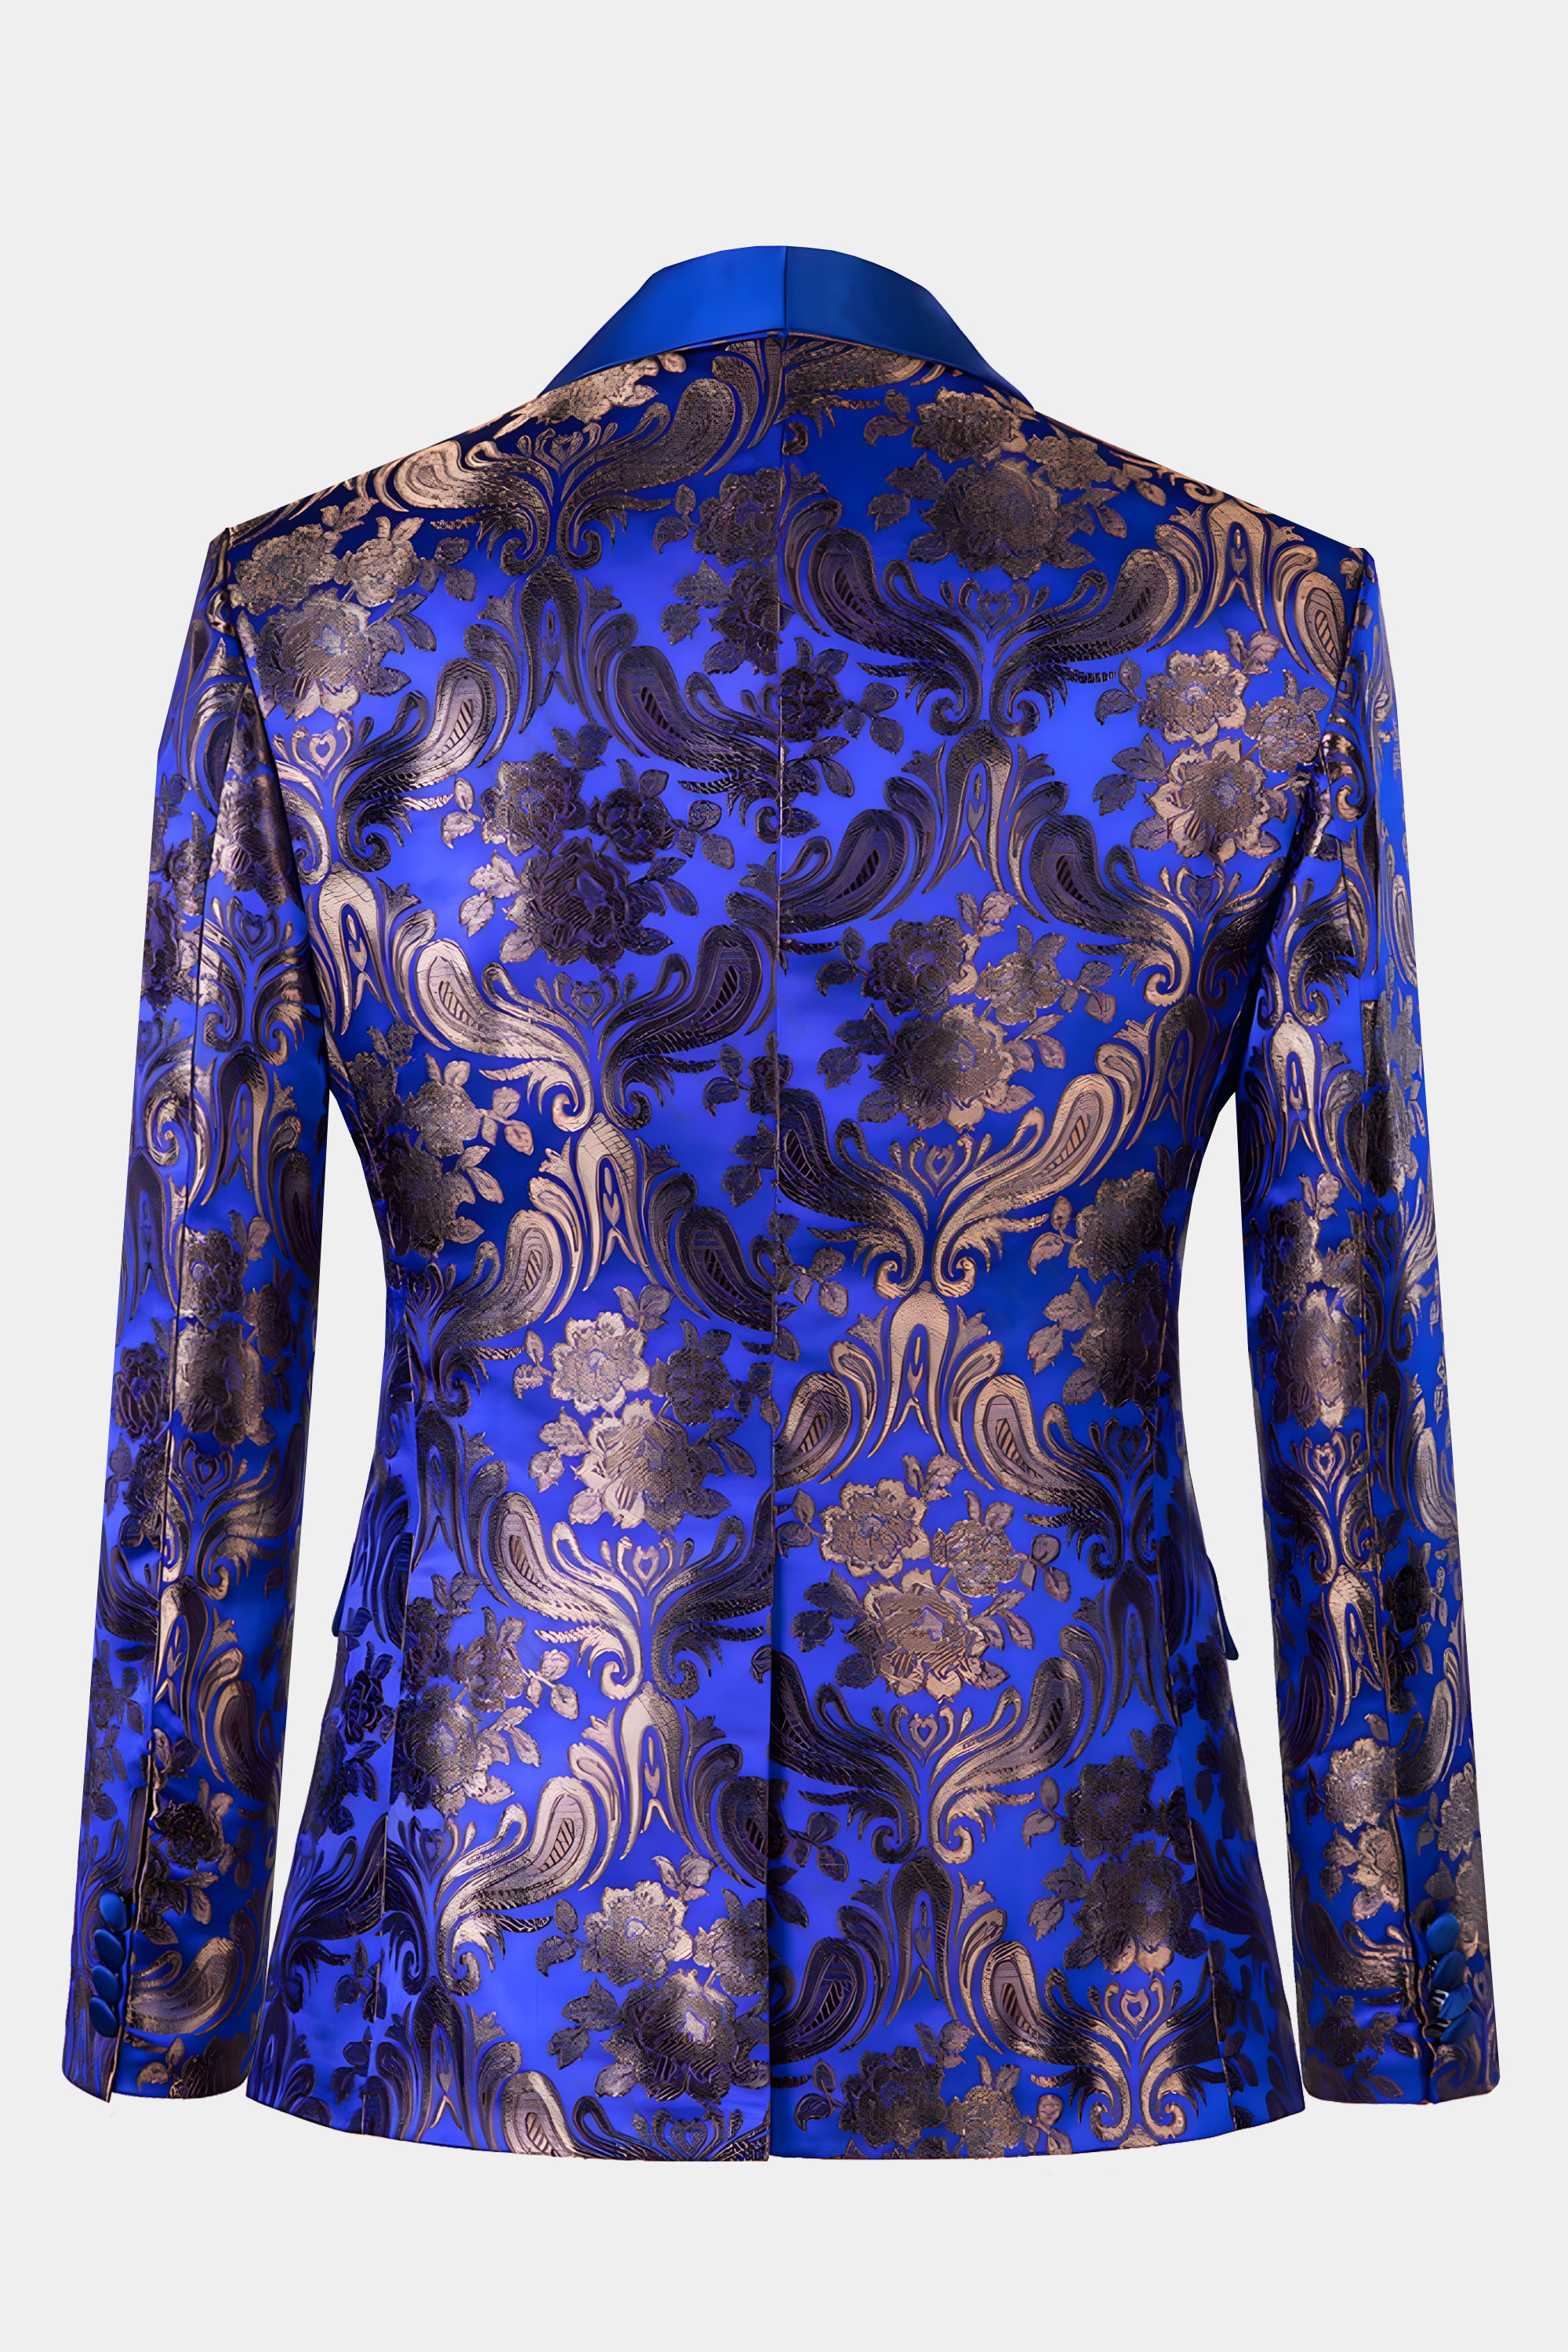 Royal-Blue-and-Goild-Tuxedo-Jacket-from-Gentlemans-Guru.com